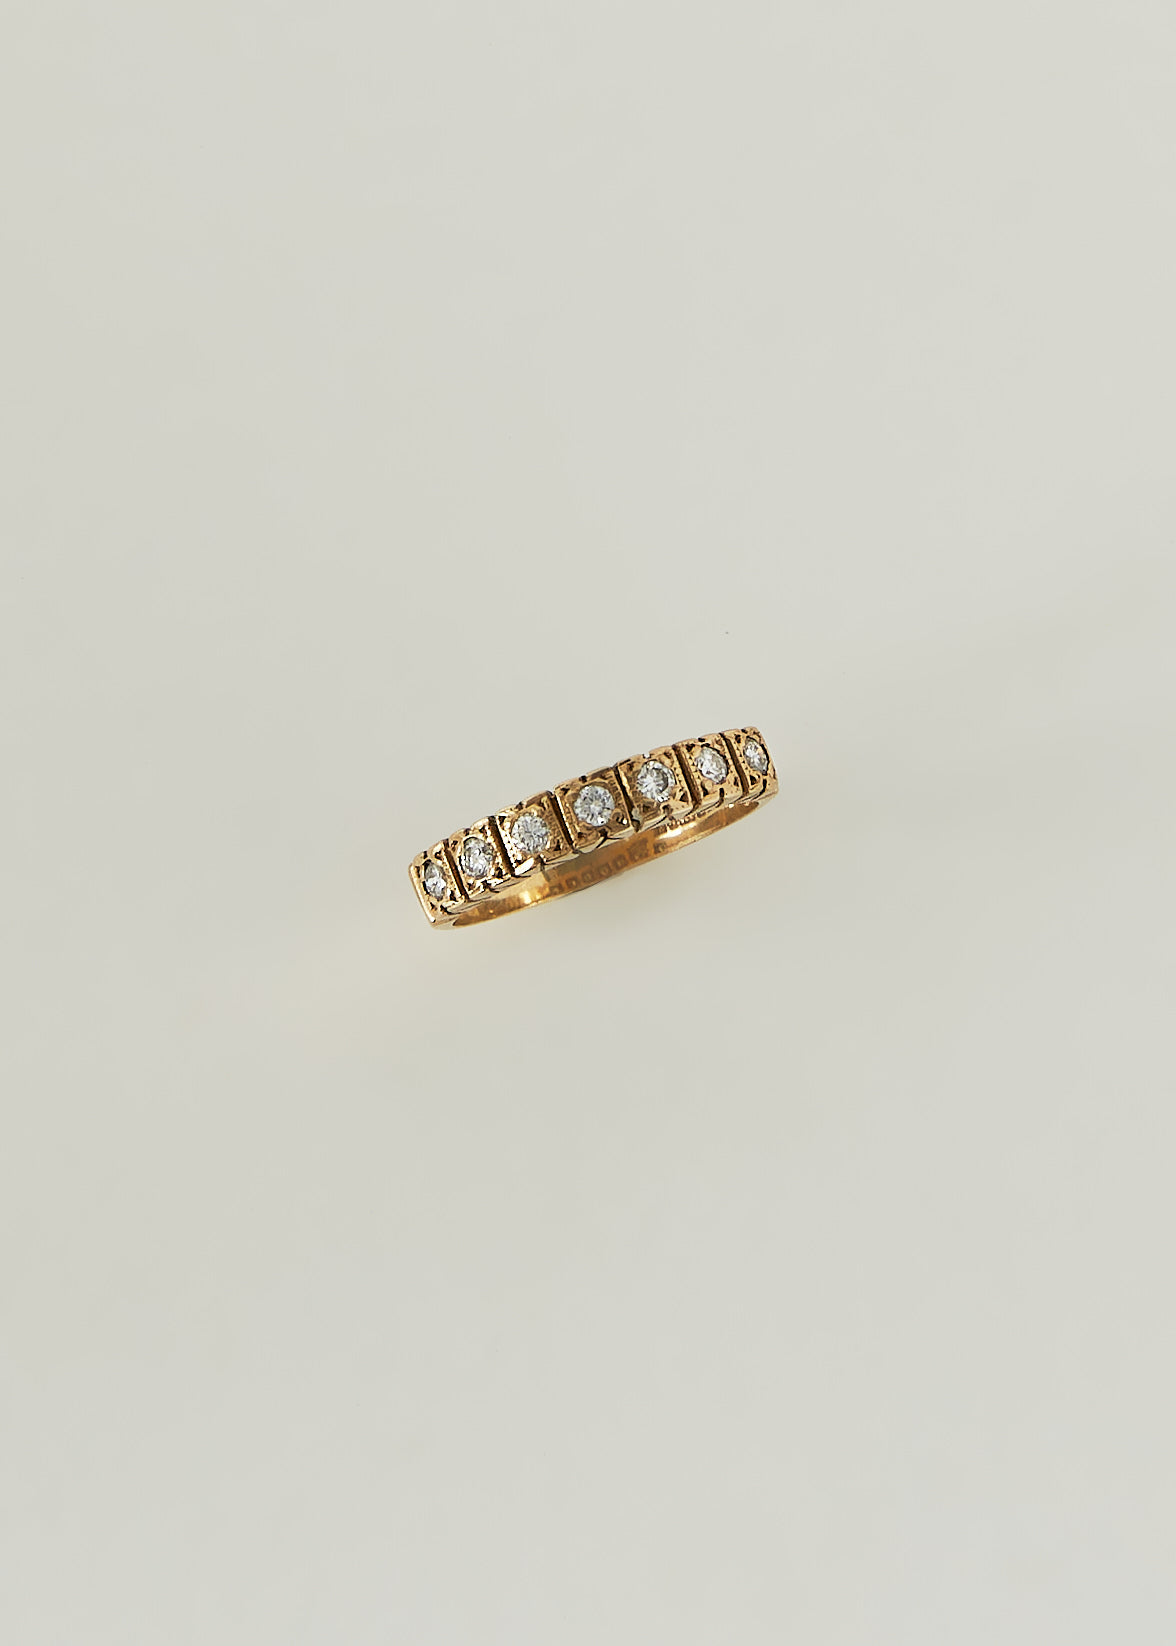 alt="Vintage Seven Round Diamond Ring"